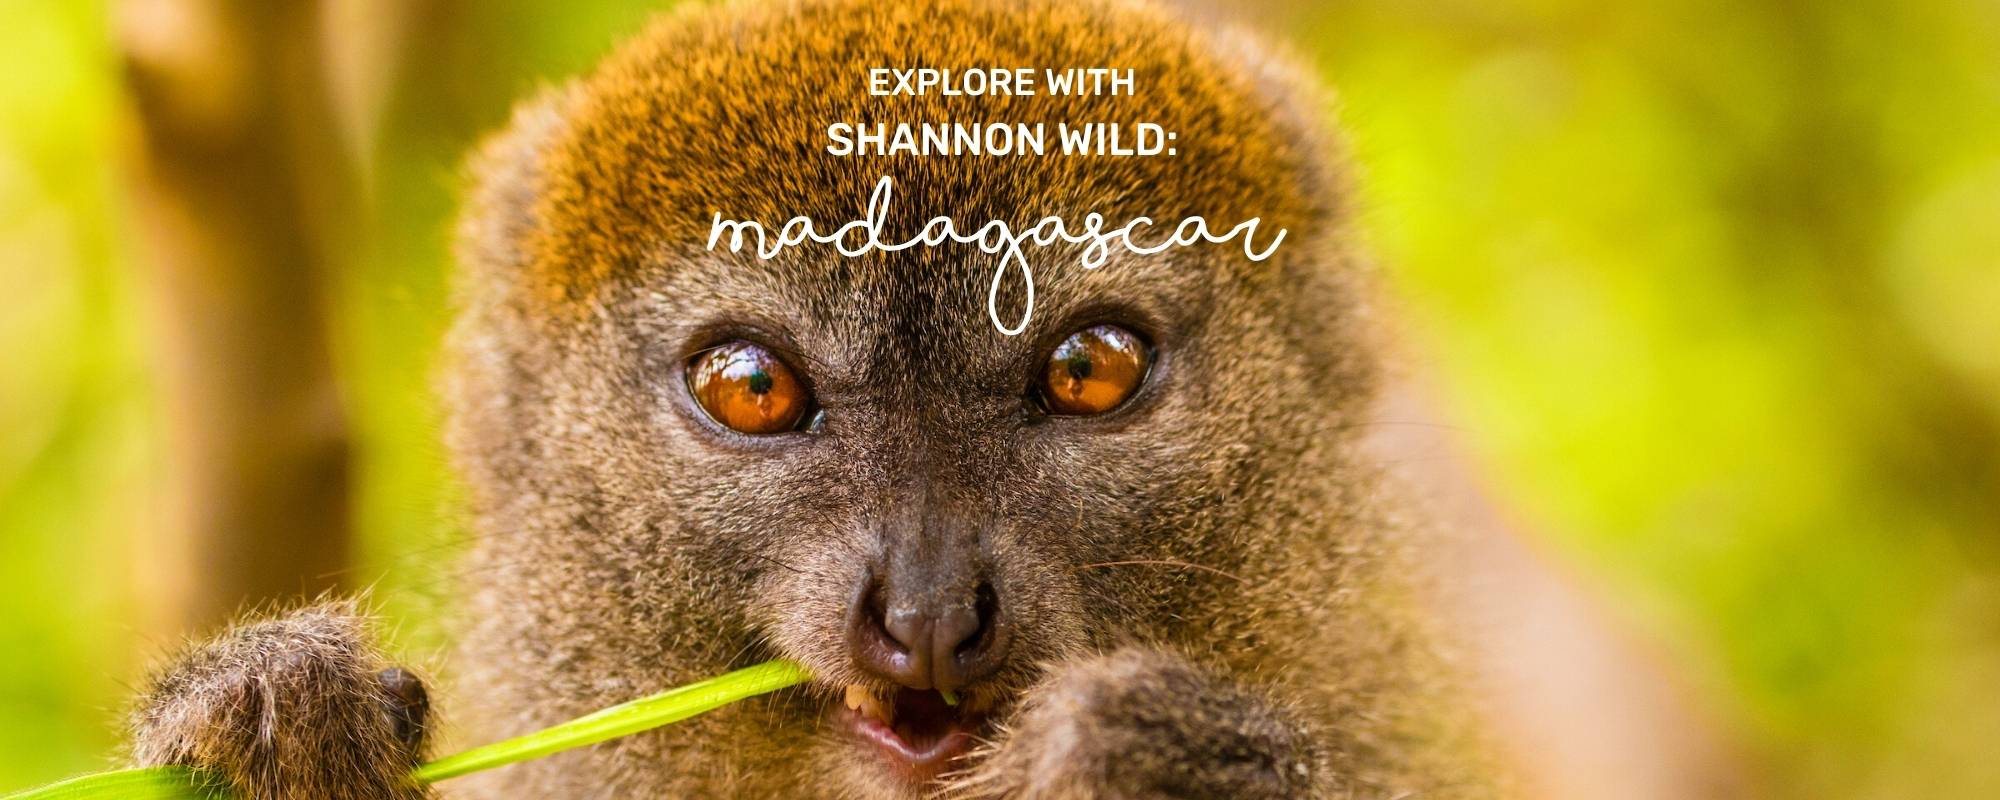 EXPLORE WITH SHANNON WILD: MADAGASCAR